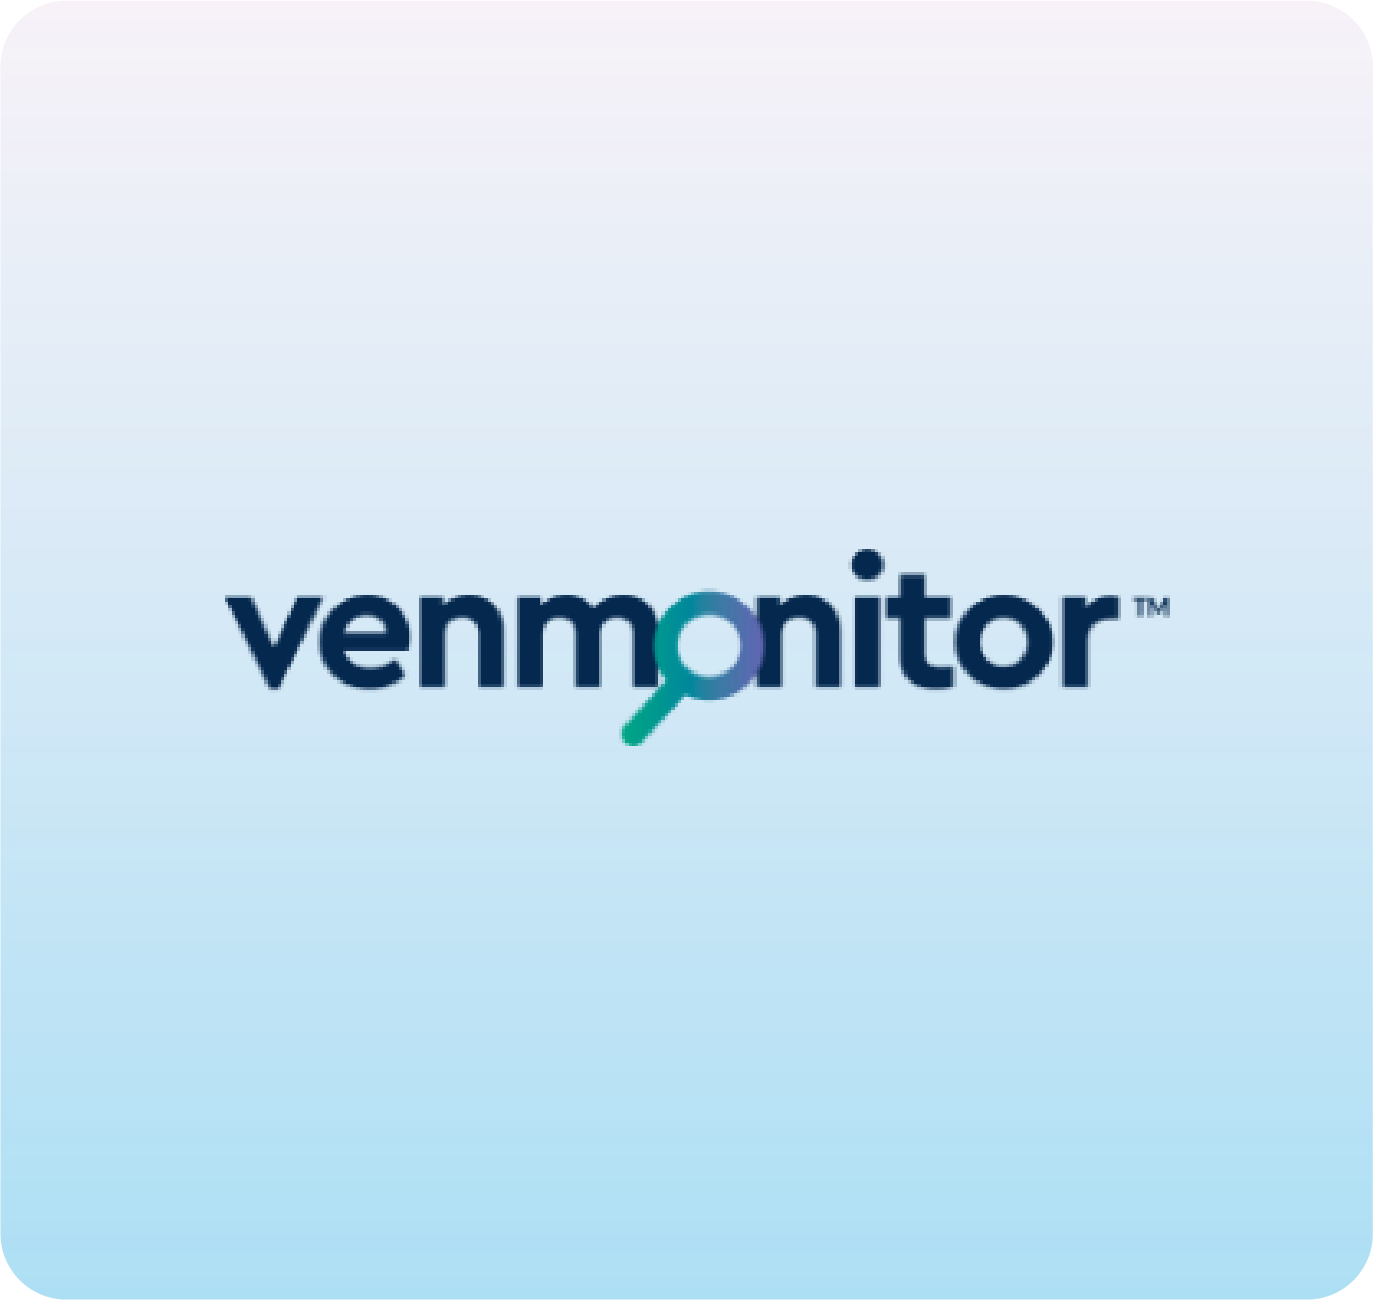 venmonitor